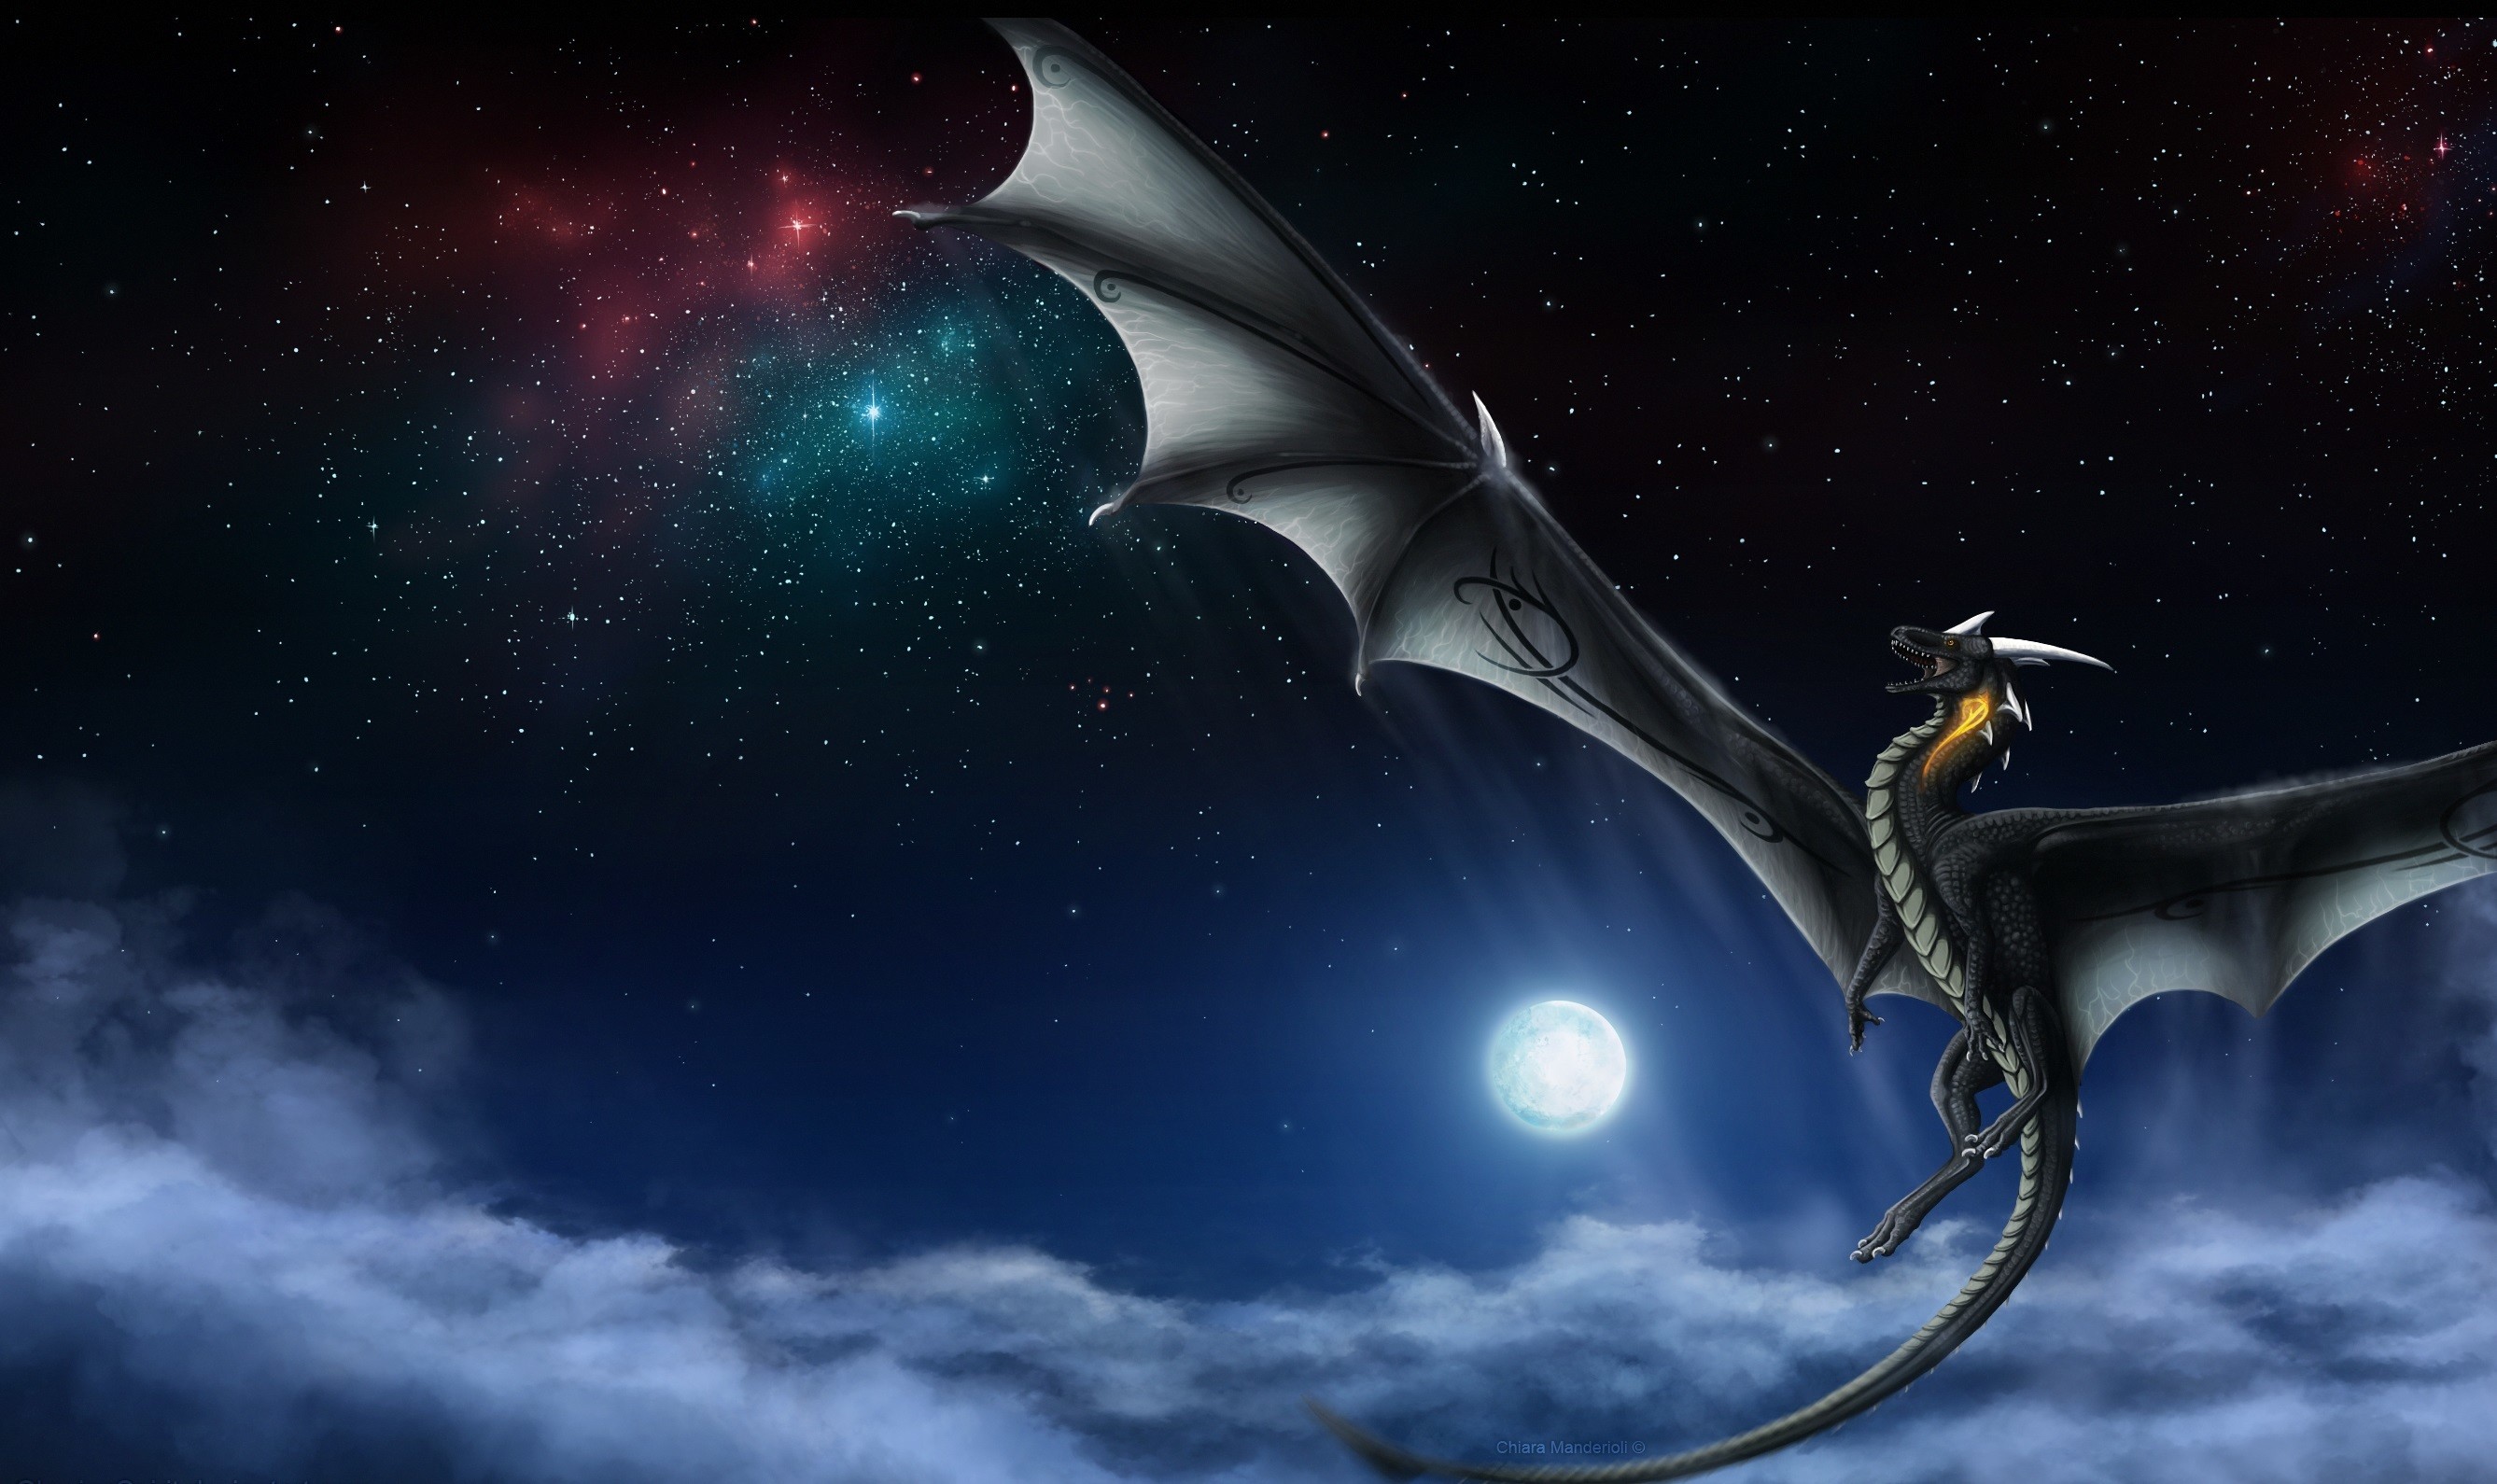 2675x1590 fantasy art dragon flight by moon night